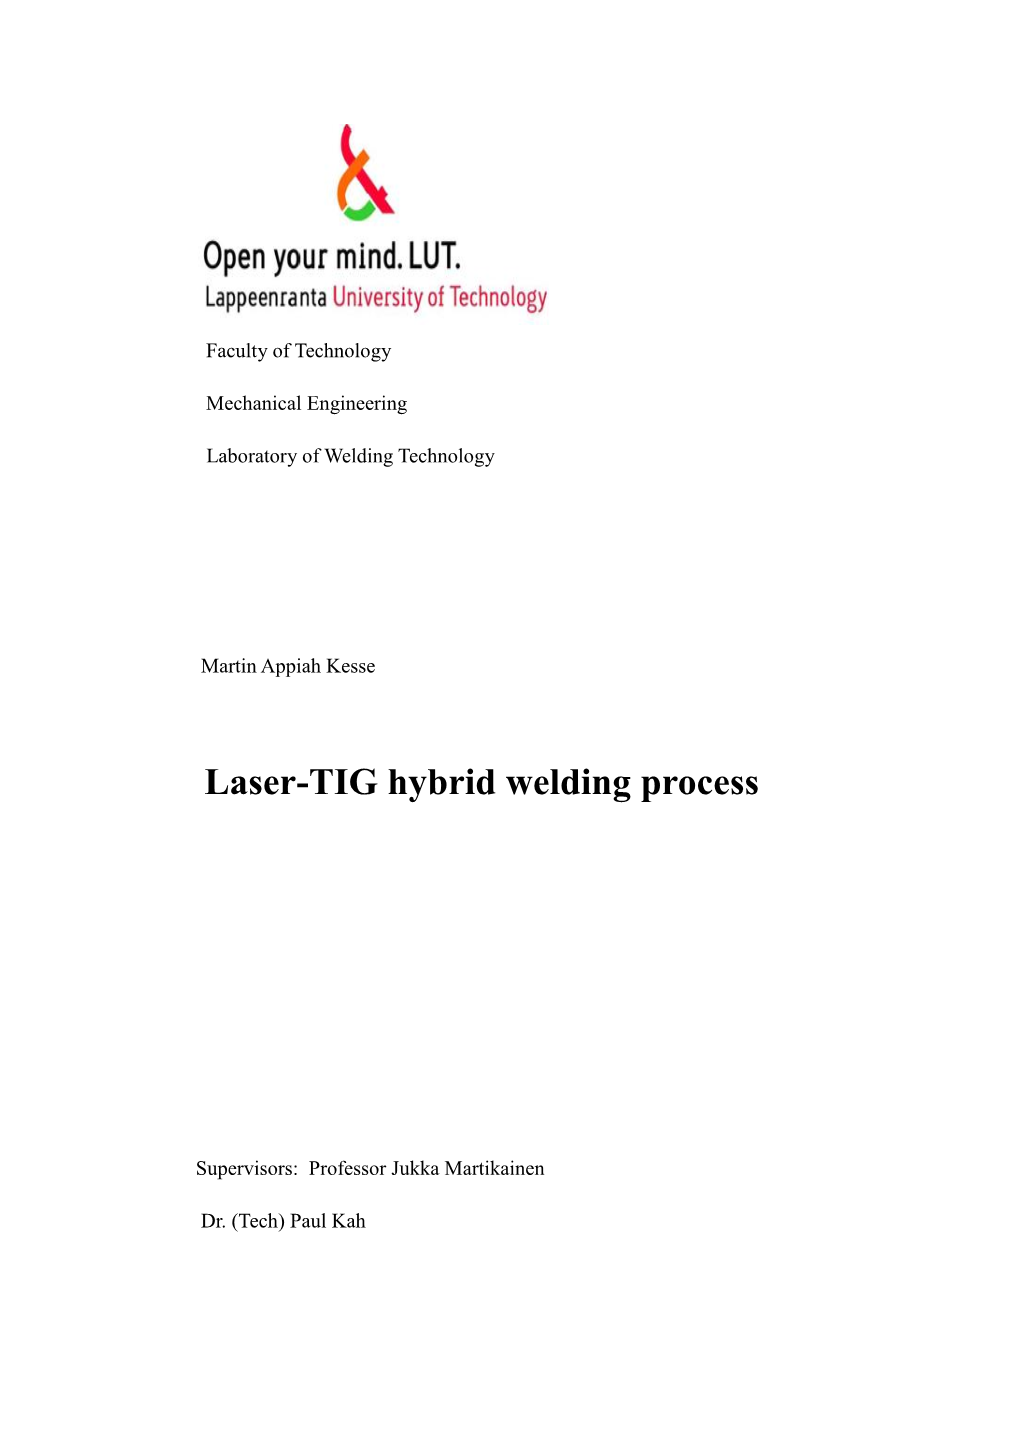 Laser-TIG Hybrid Welding Process